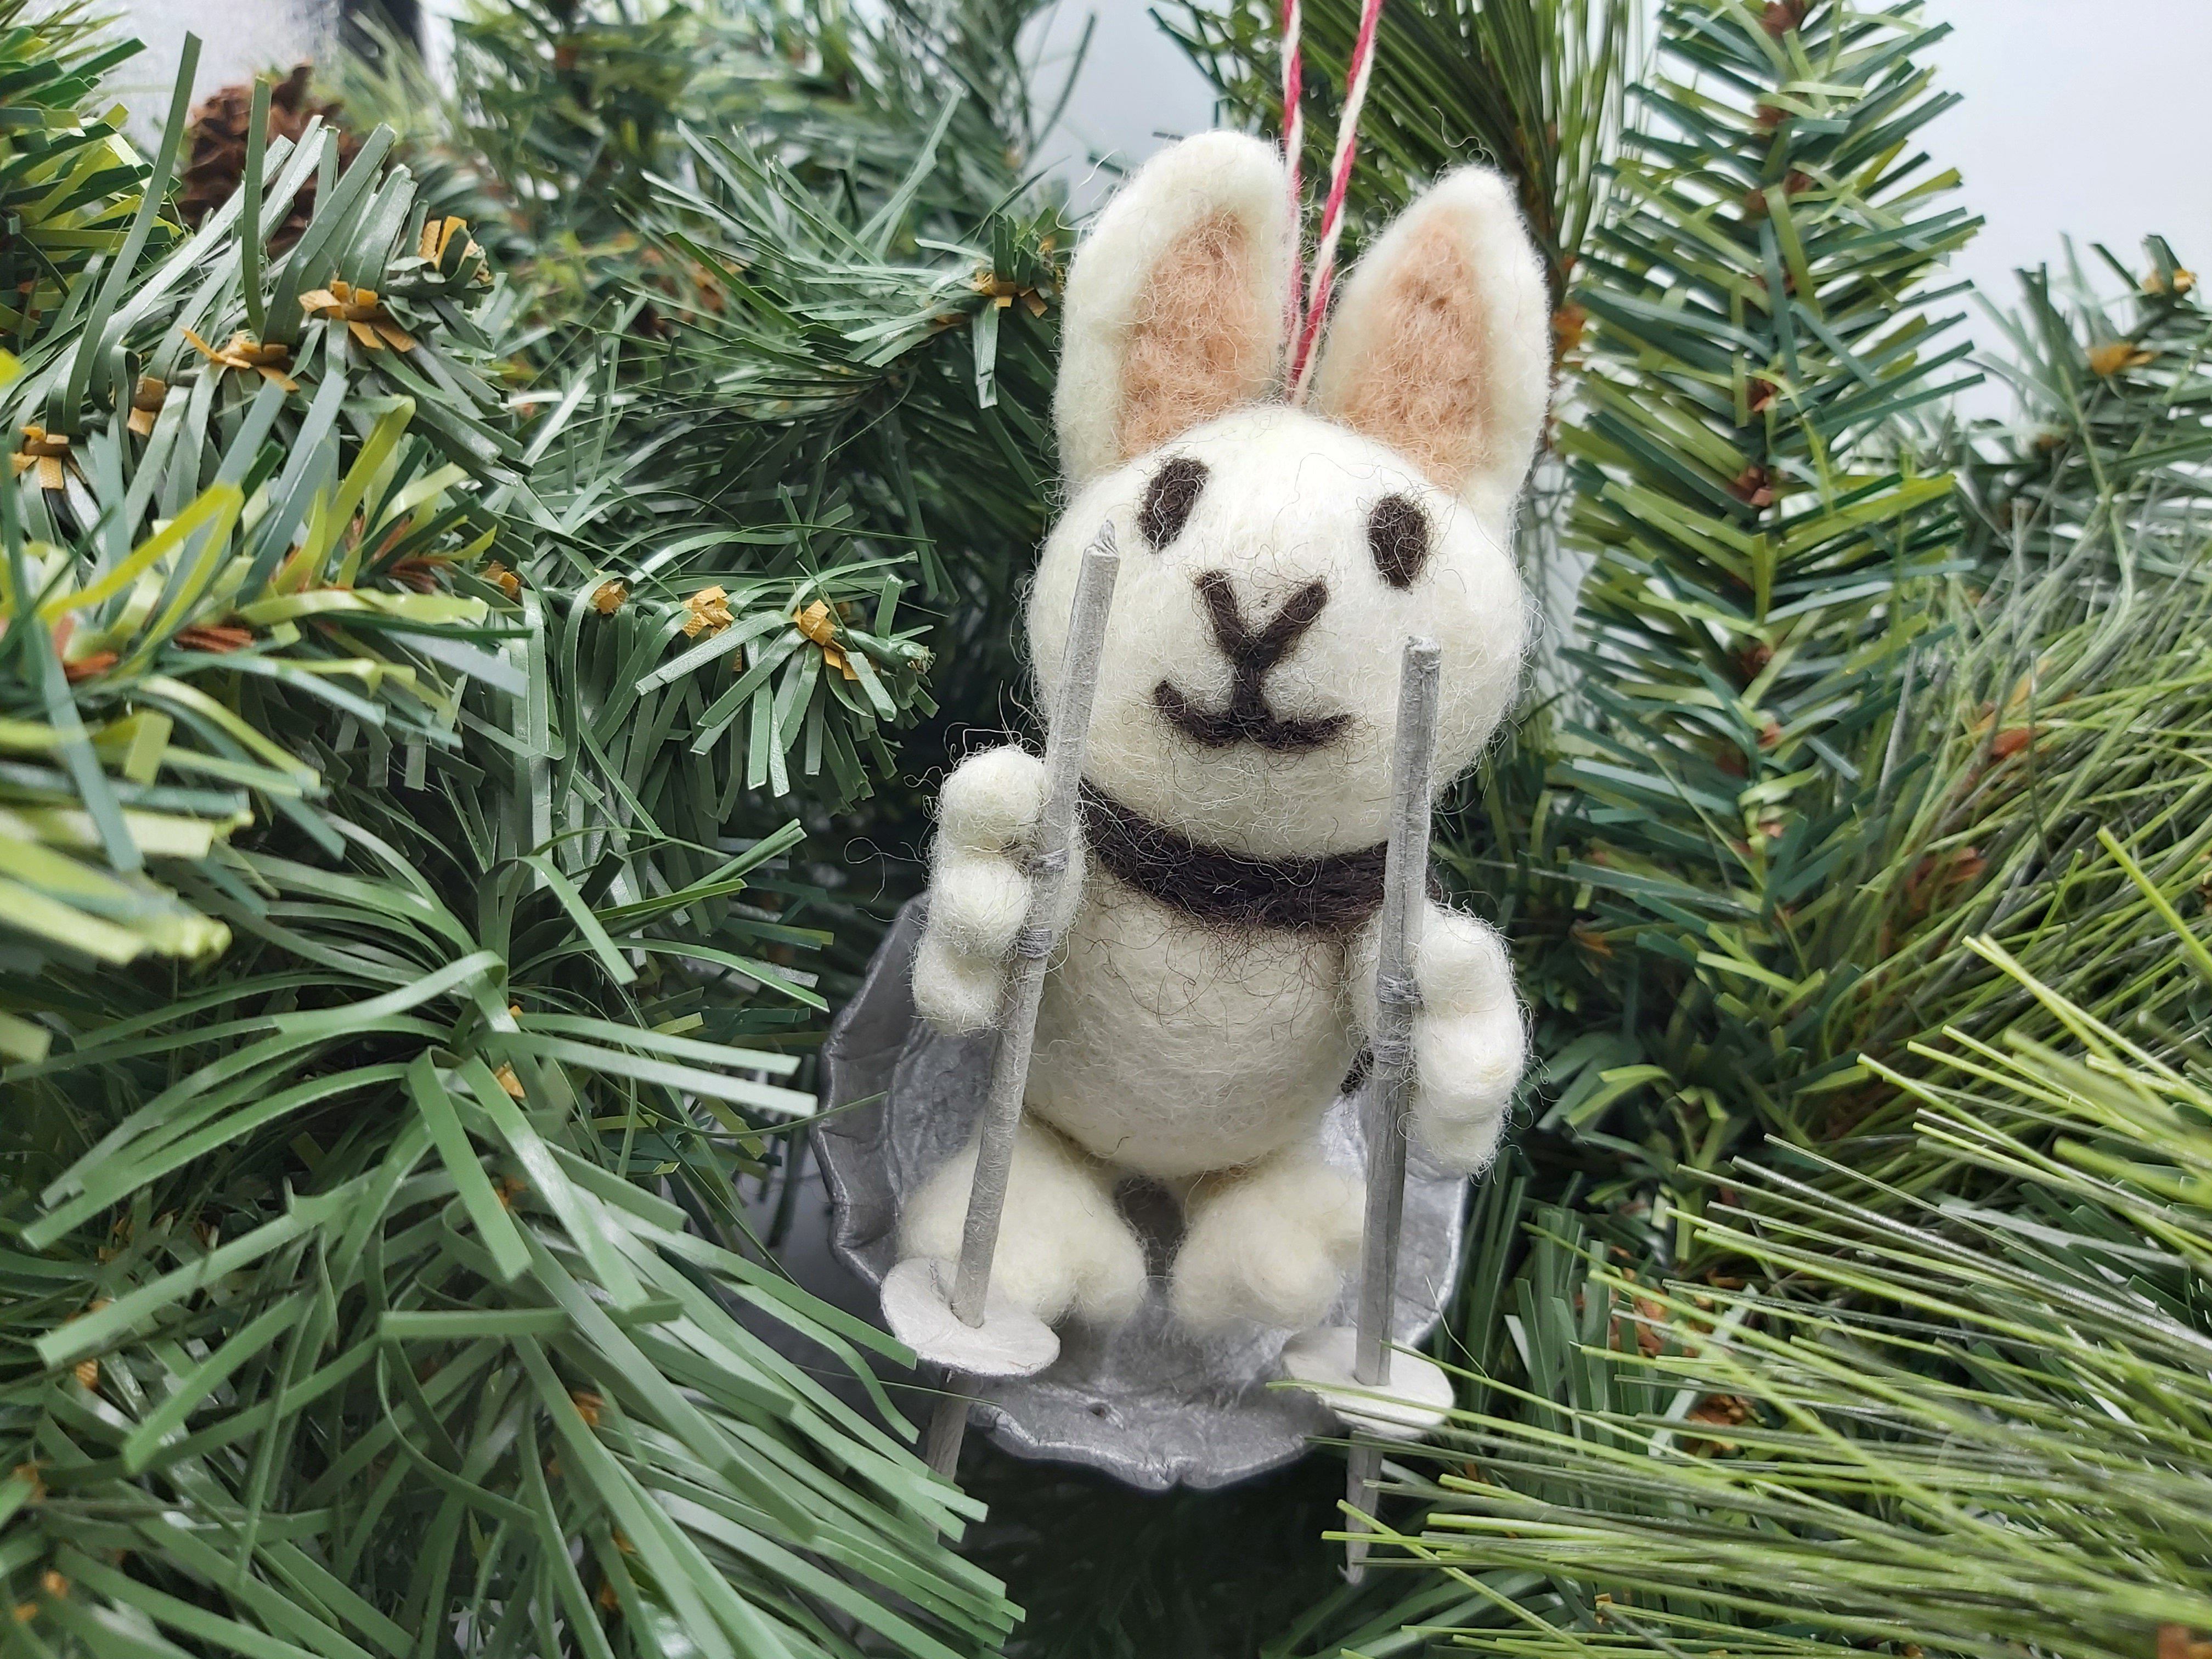 Toboggan Rabbit Christmas ornament Everest Fashion 